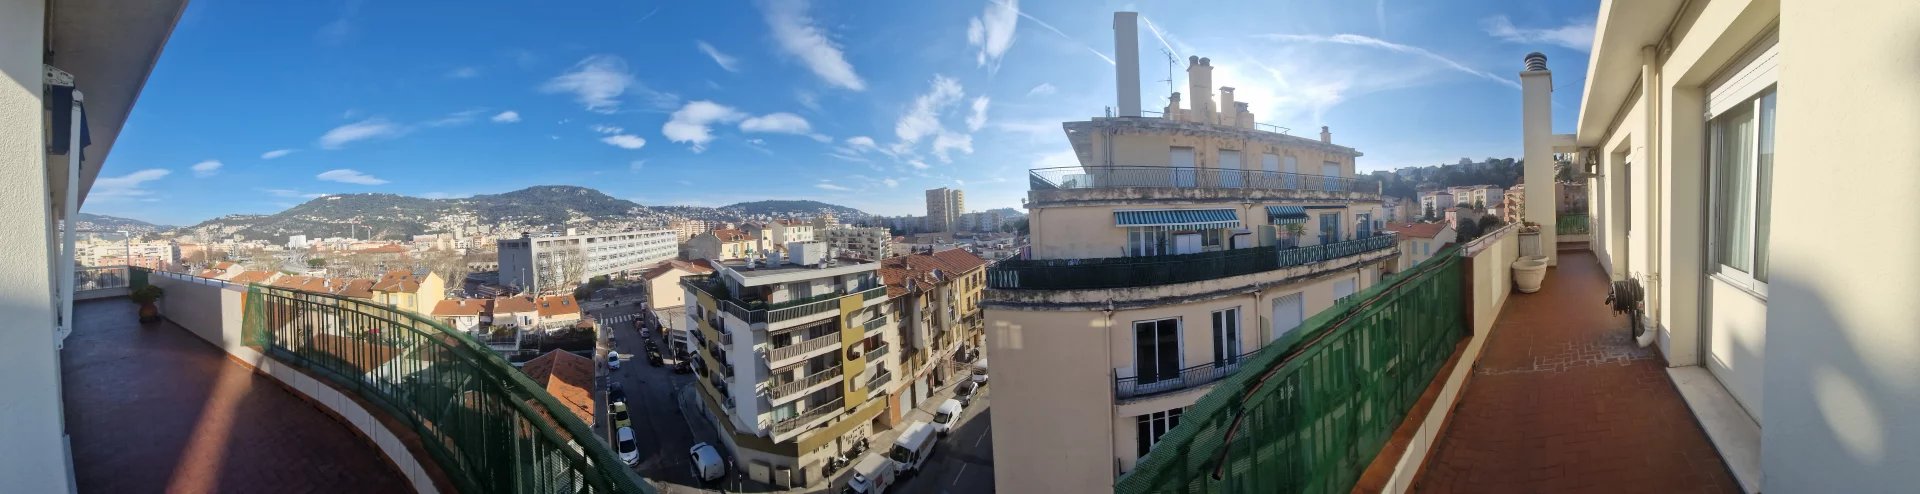 Vente Appartement 81m² 4 Pièces à Nice (06000) - Lubiana Immobilier